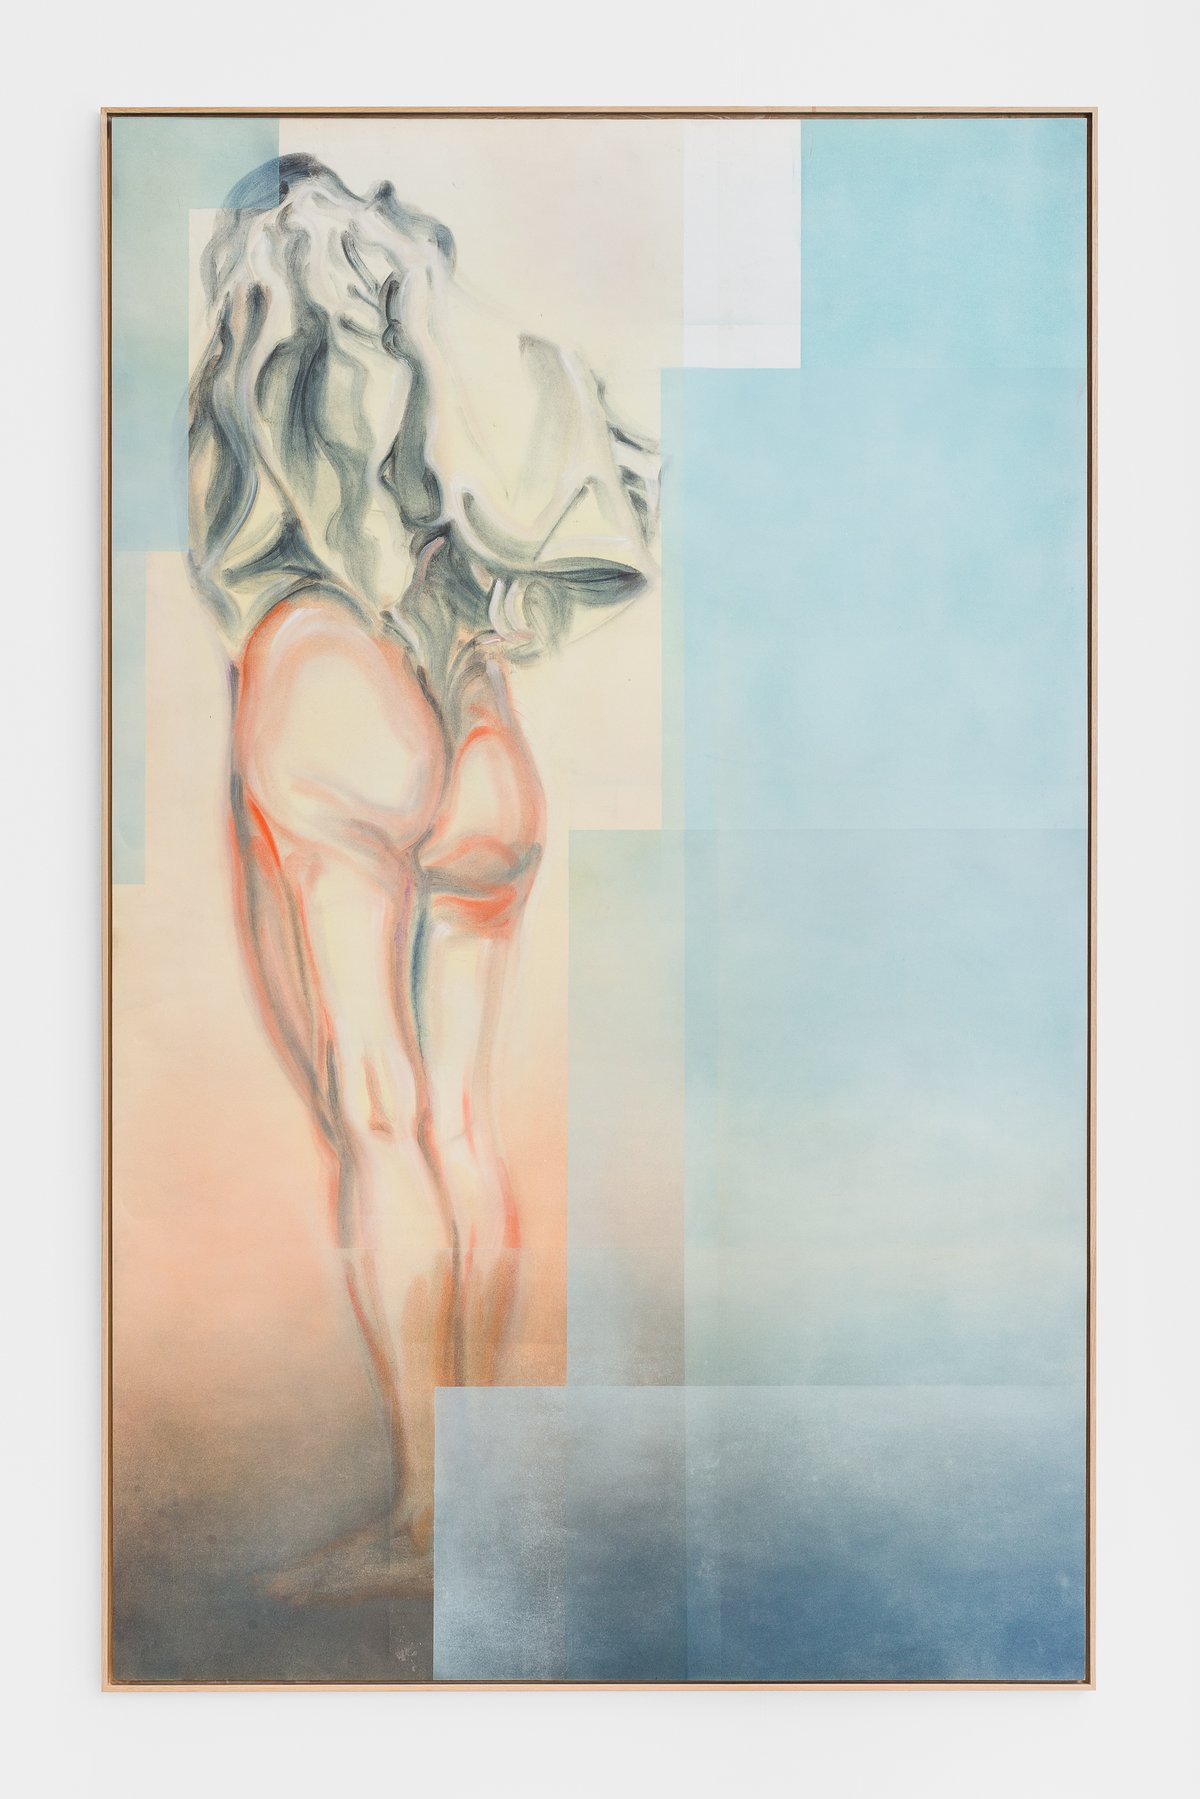 Evelyn PlaschgUntitled yet, 2022Pigment on Paper182 x 112.5 cm (framed)